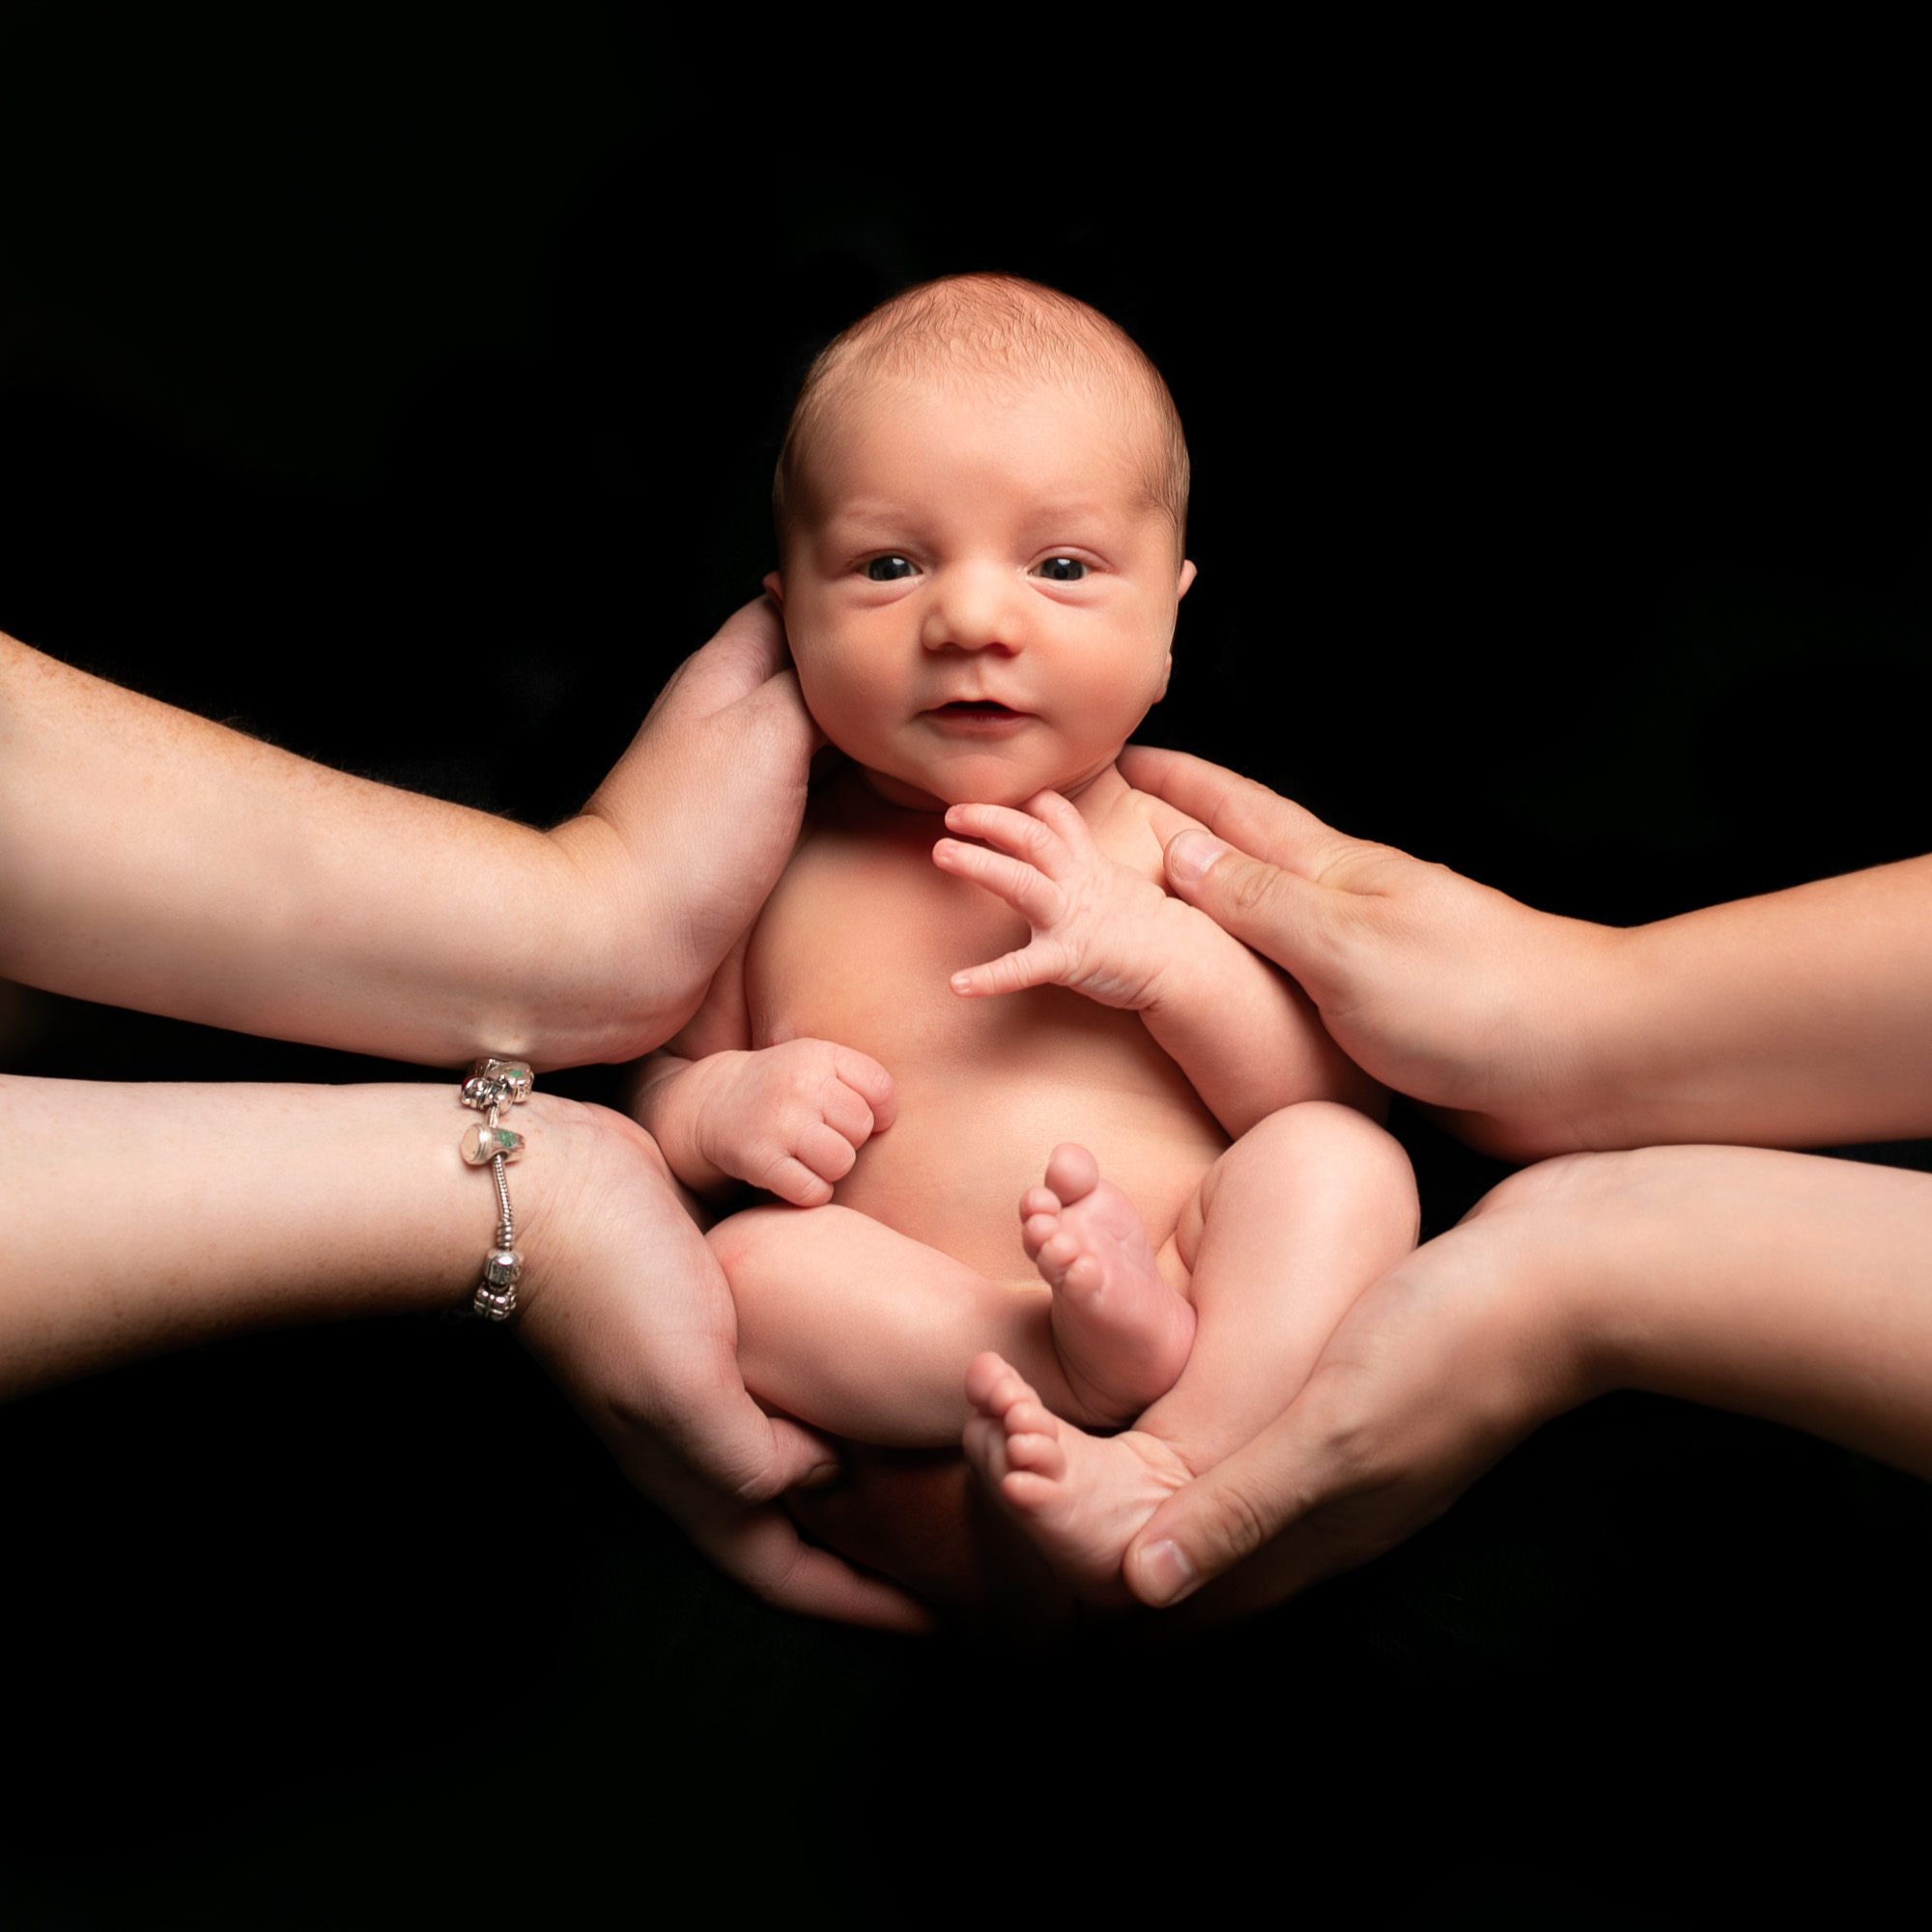 newborn photoshoot baby awake being cradled by parents hands on black background